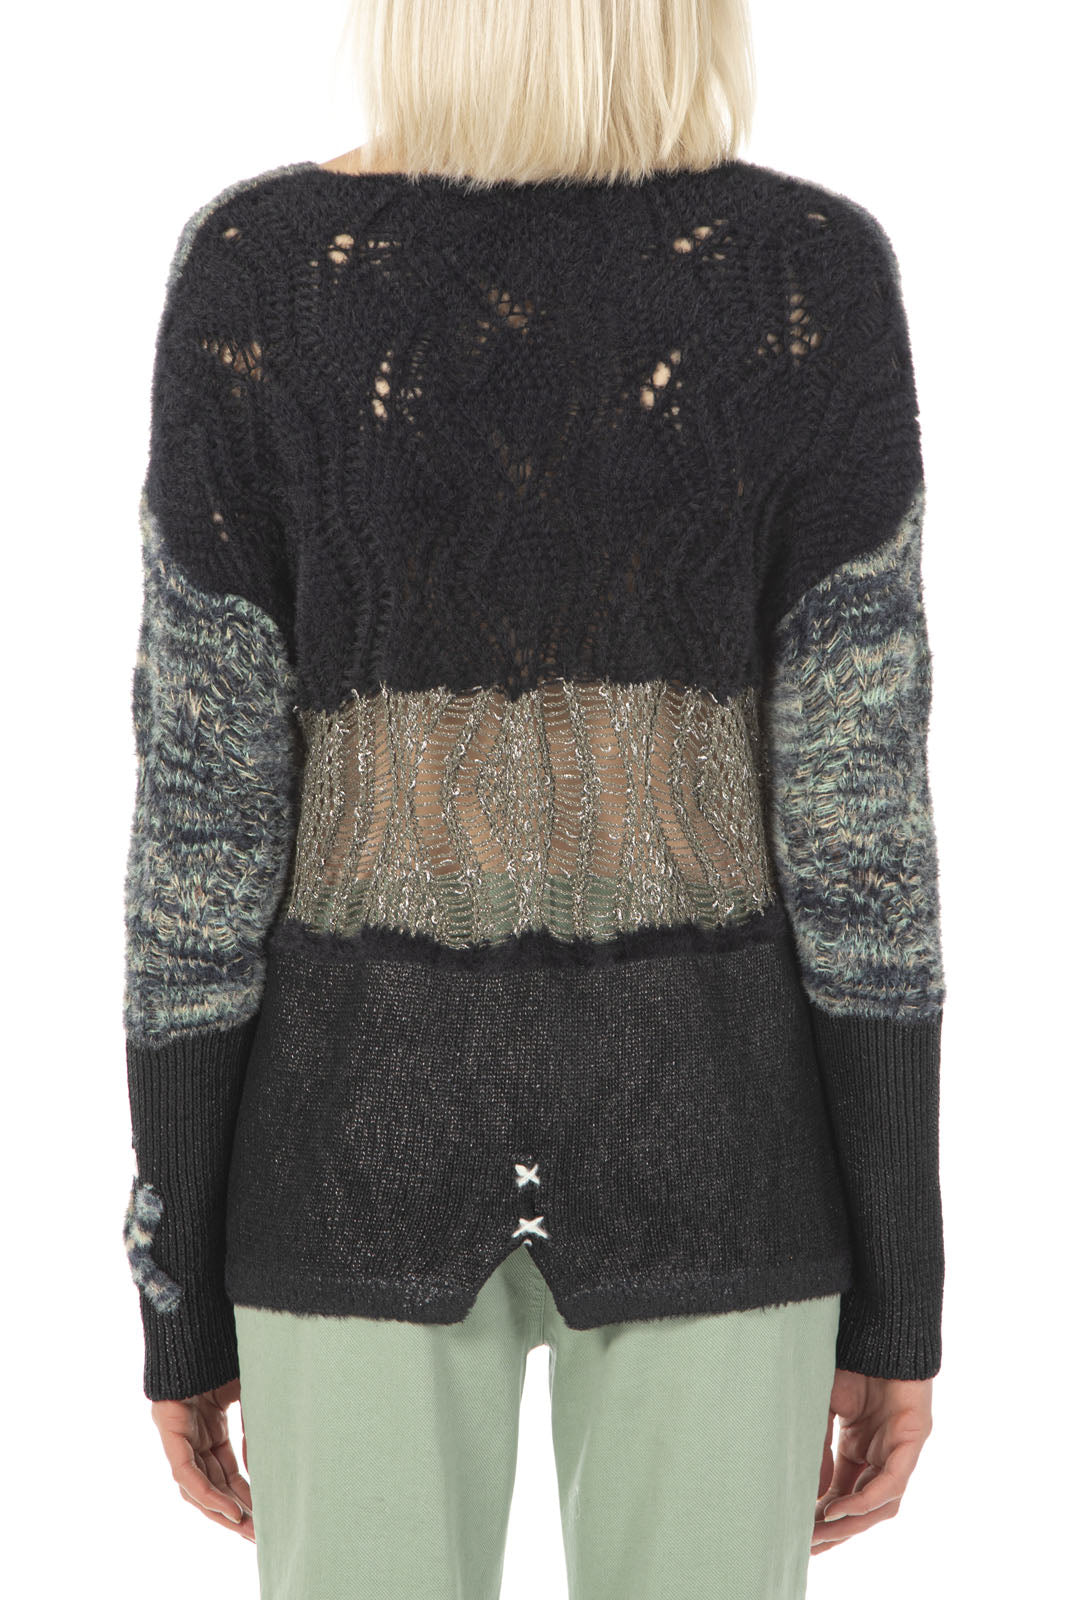 Elisa Cavaletti - Knit Pullover Sweater